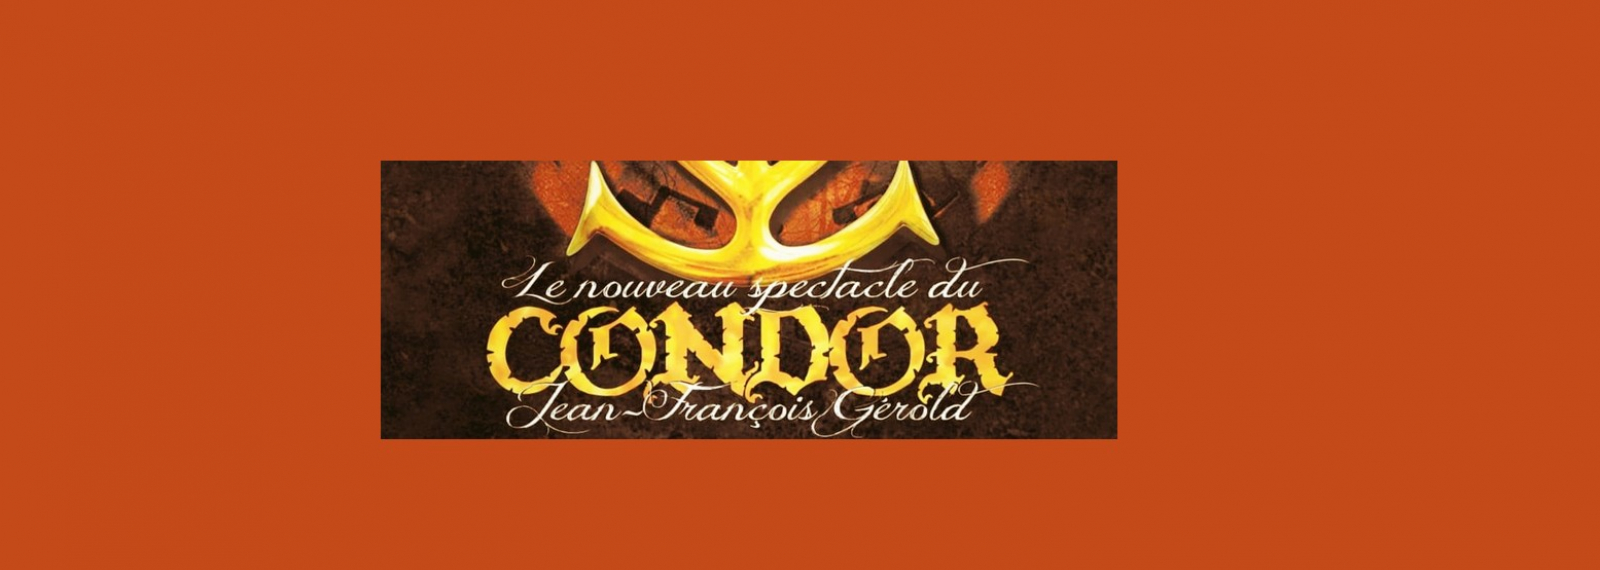 Concert Le Condor